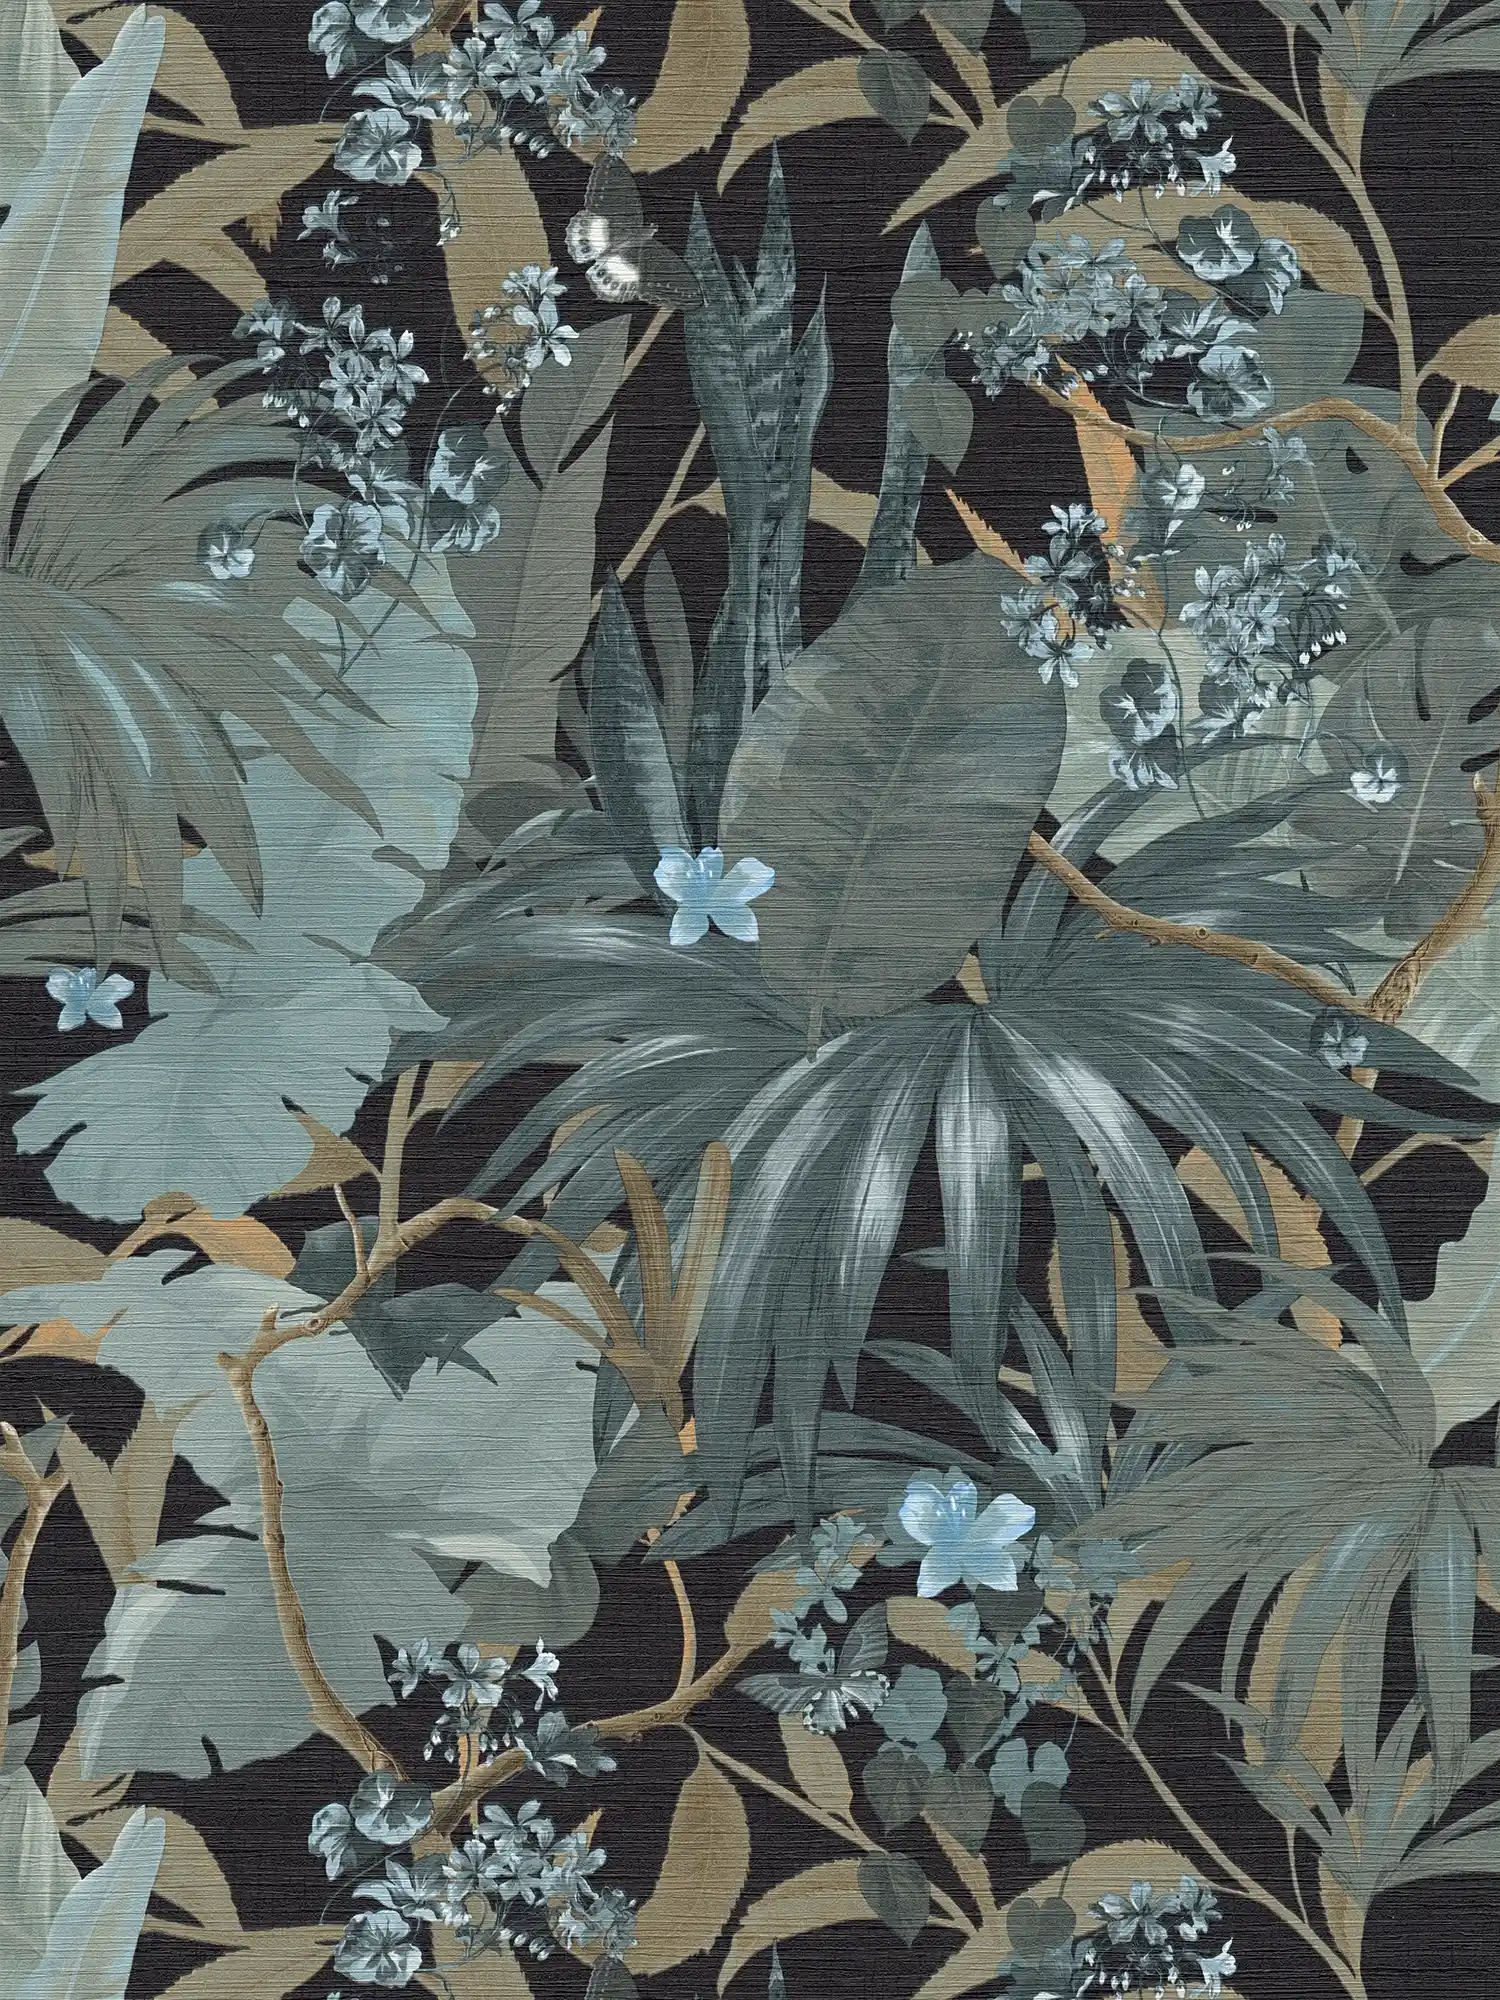 Wallpaper jungle design with leaf pattern - grey, green
